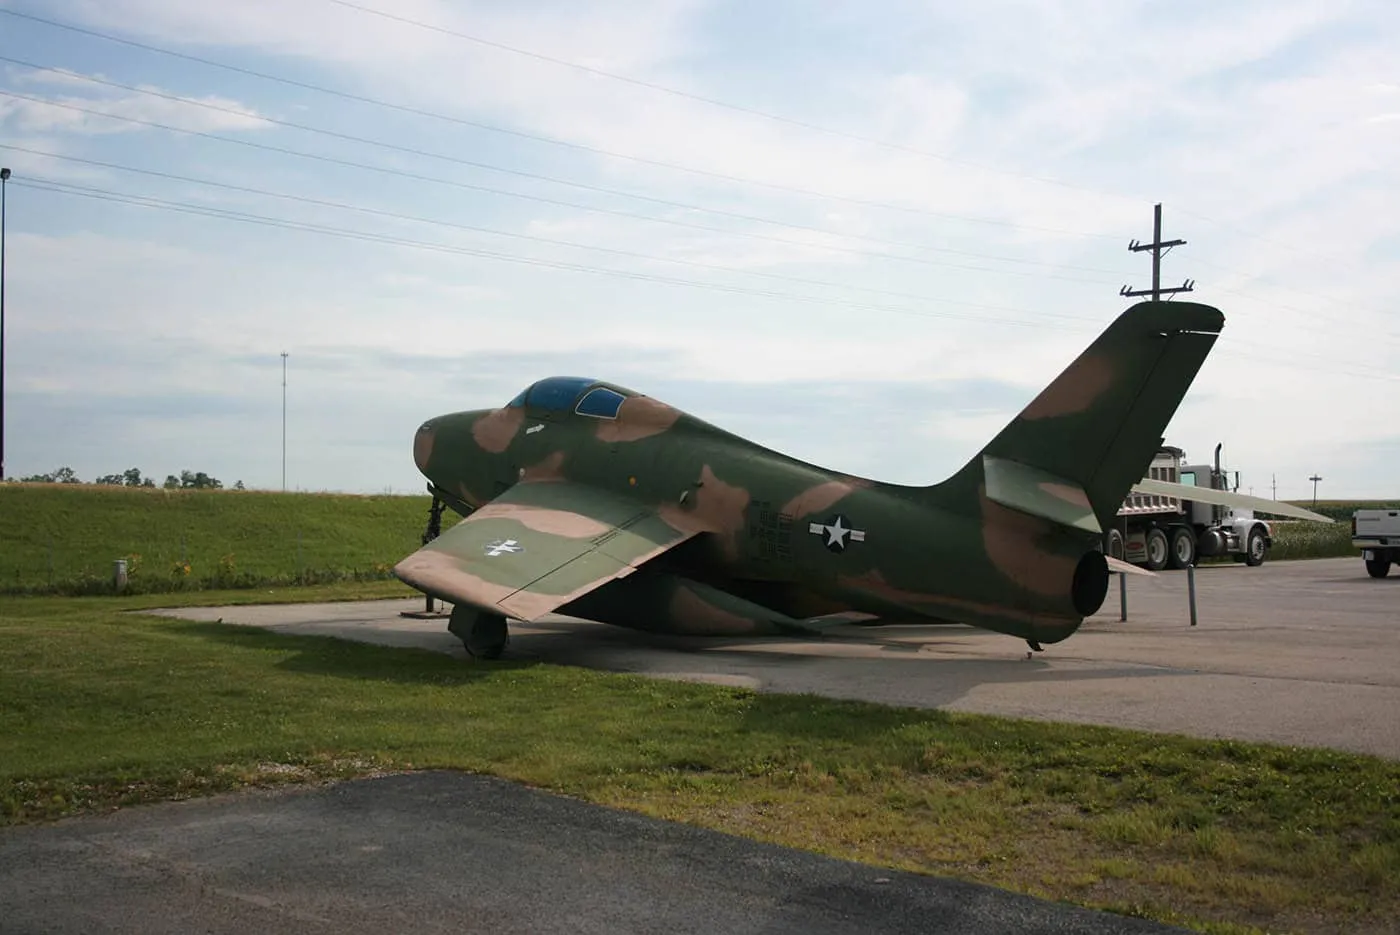 F-84F Thunderstreak - Parking Lot Jet Plane - in Wenona, Illinois